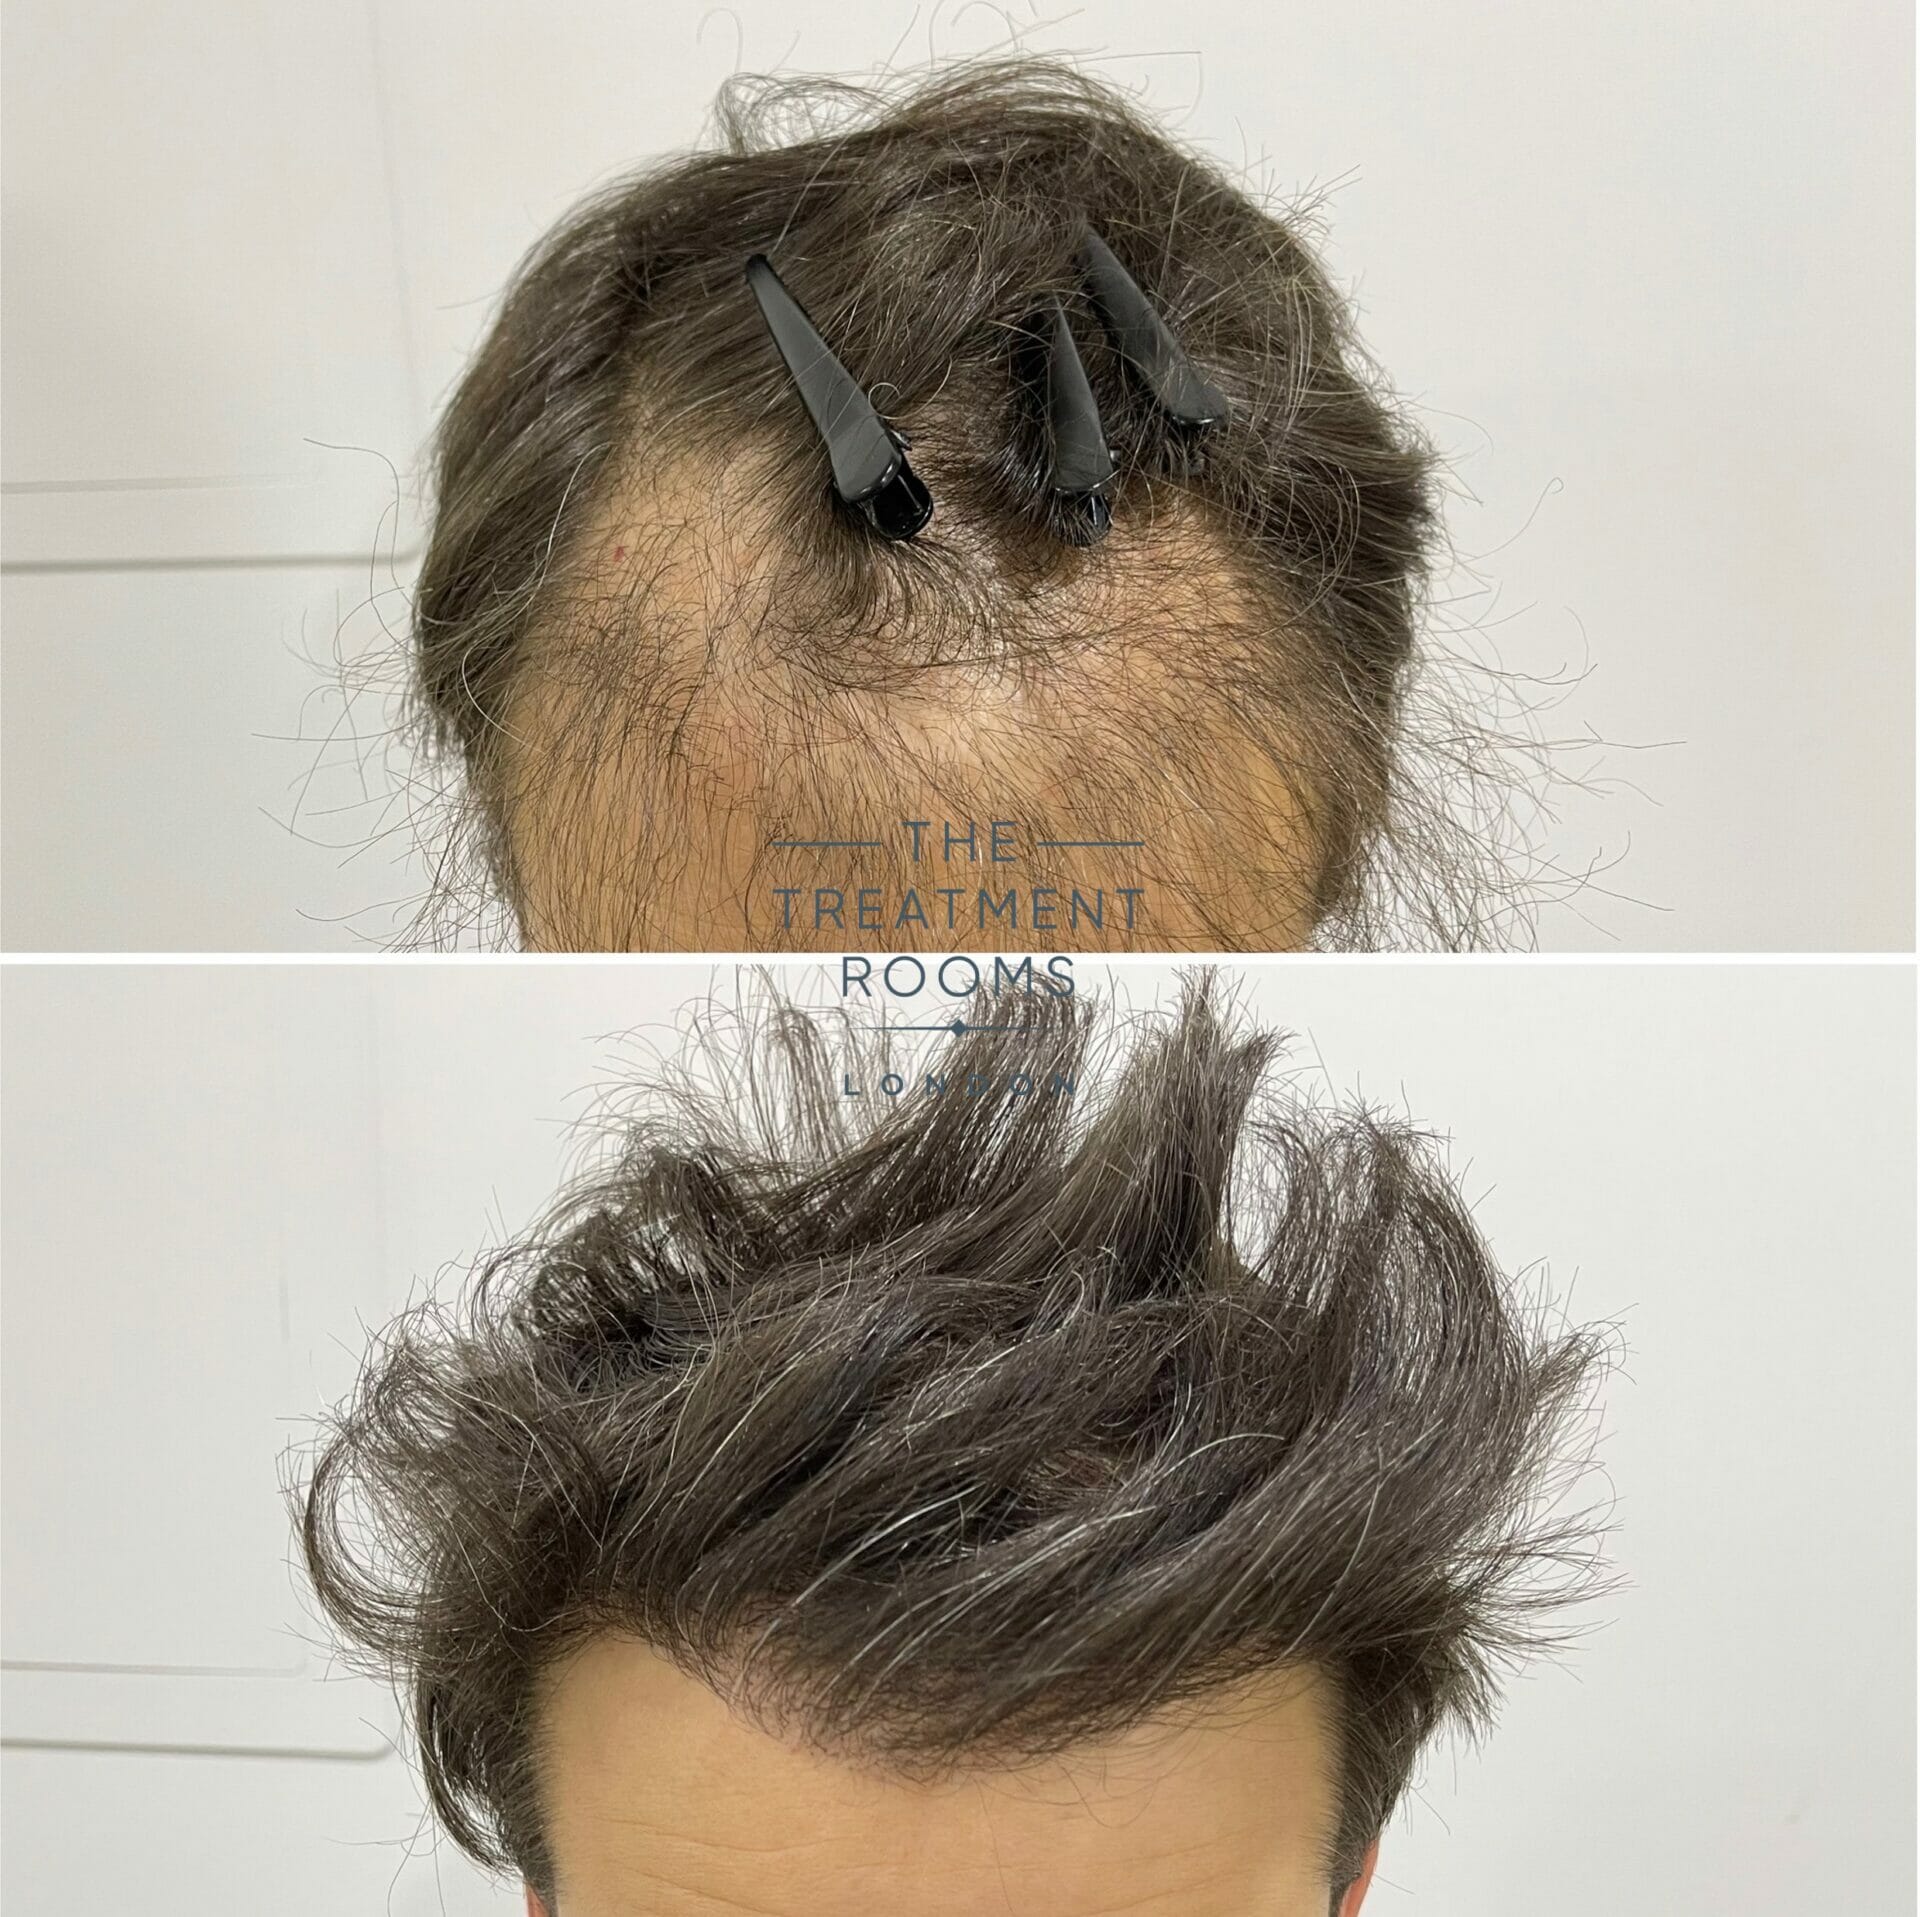 repair hair transplant for a bad hair transplant